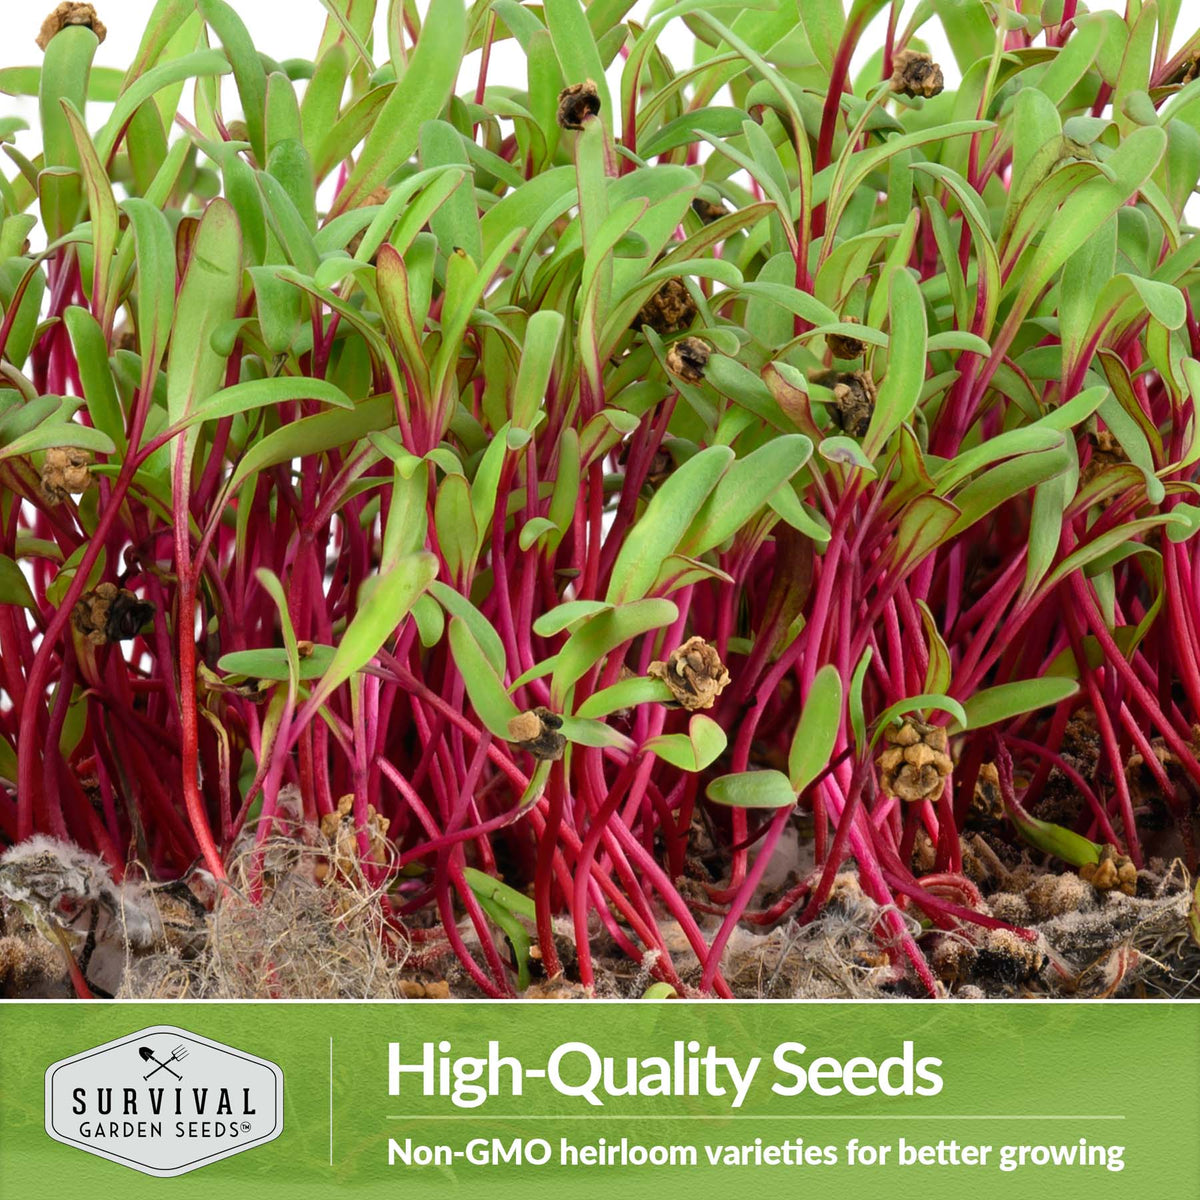 High quality non-GMO heirloom microgreen seeds